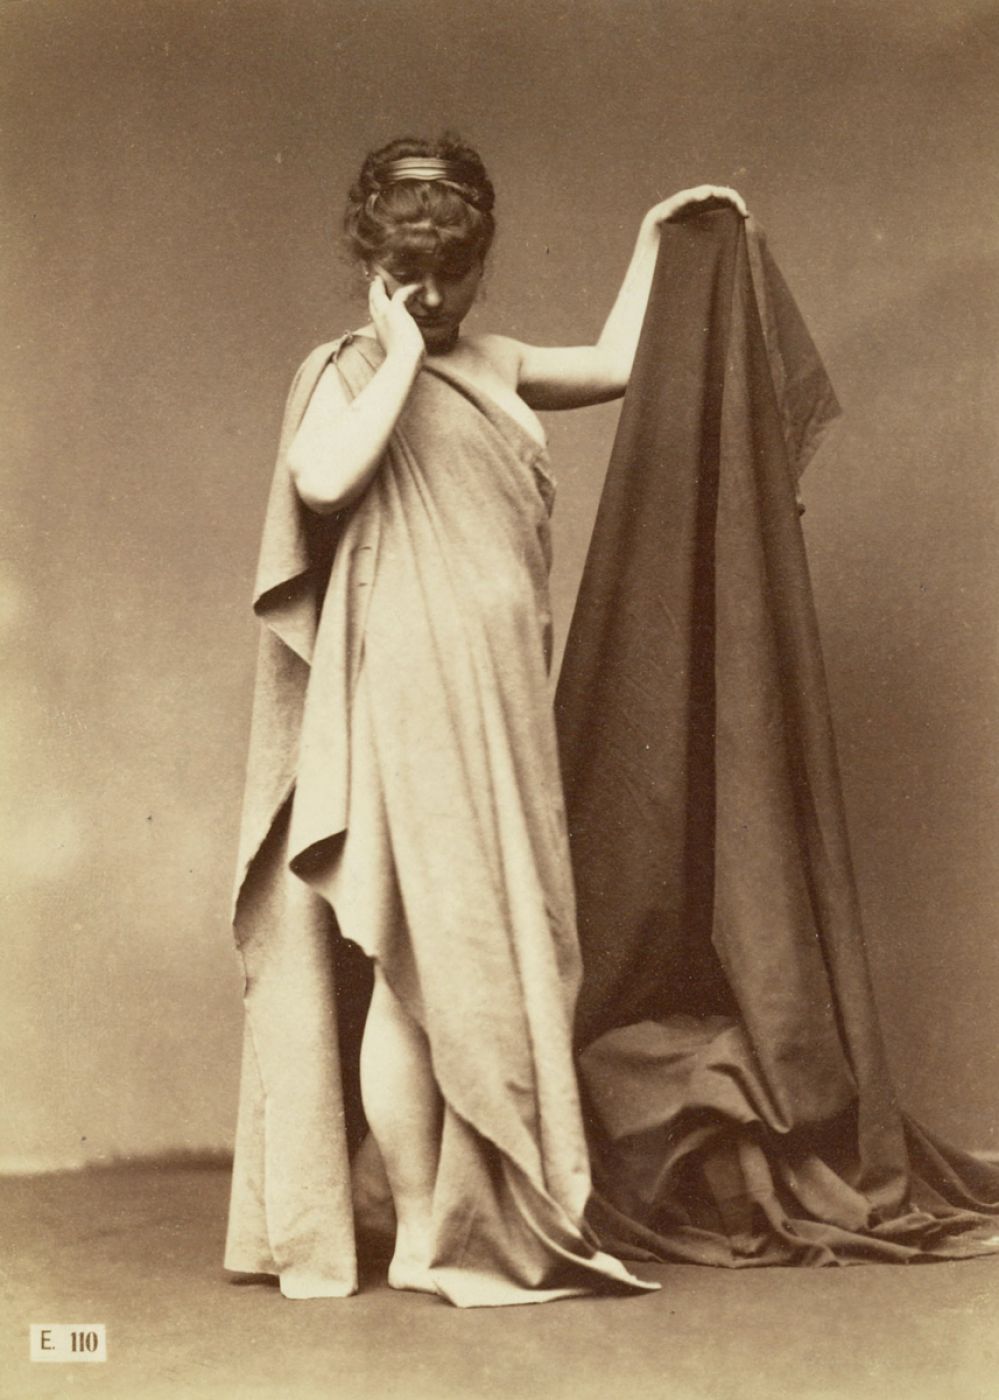  Louis Jean-Baptiste Igout, “Untitled”, 1870 ca.